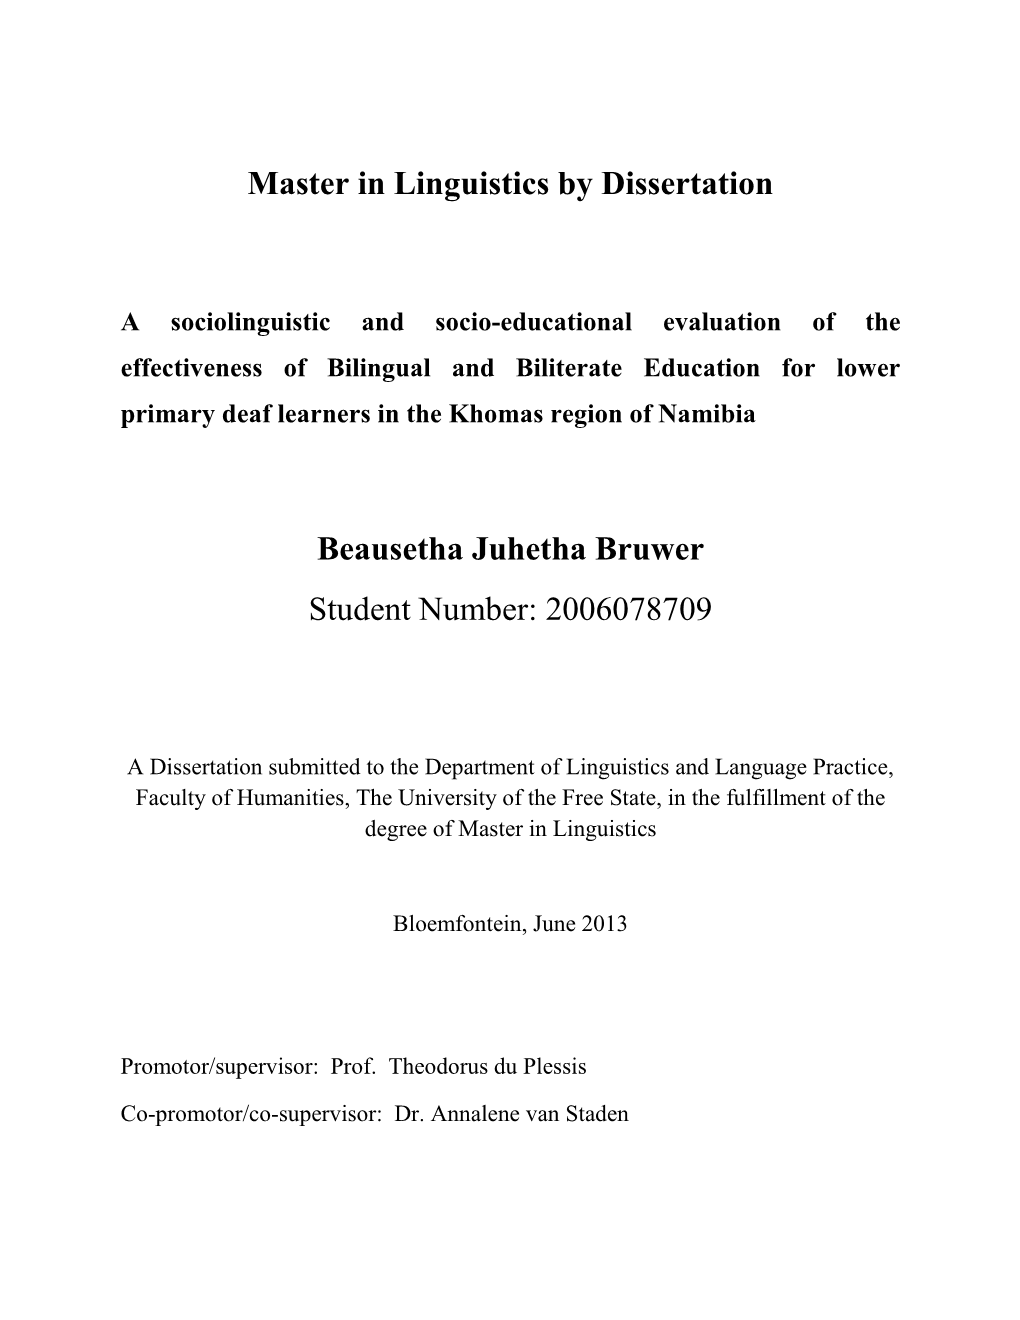 Master in Linguistics by Dissertation Beausetha Juhetha Bruwer Student